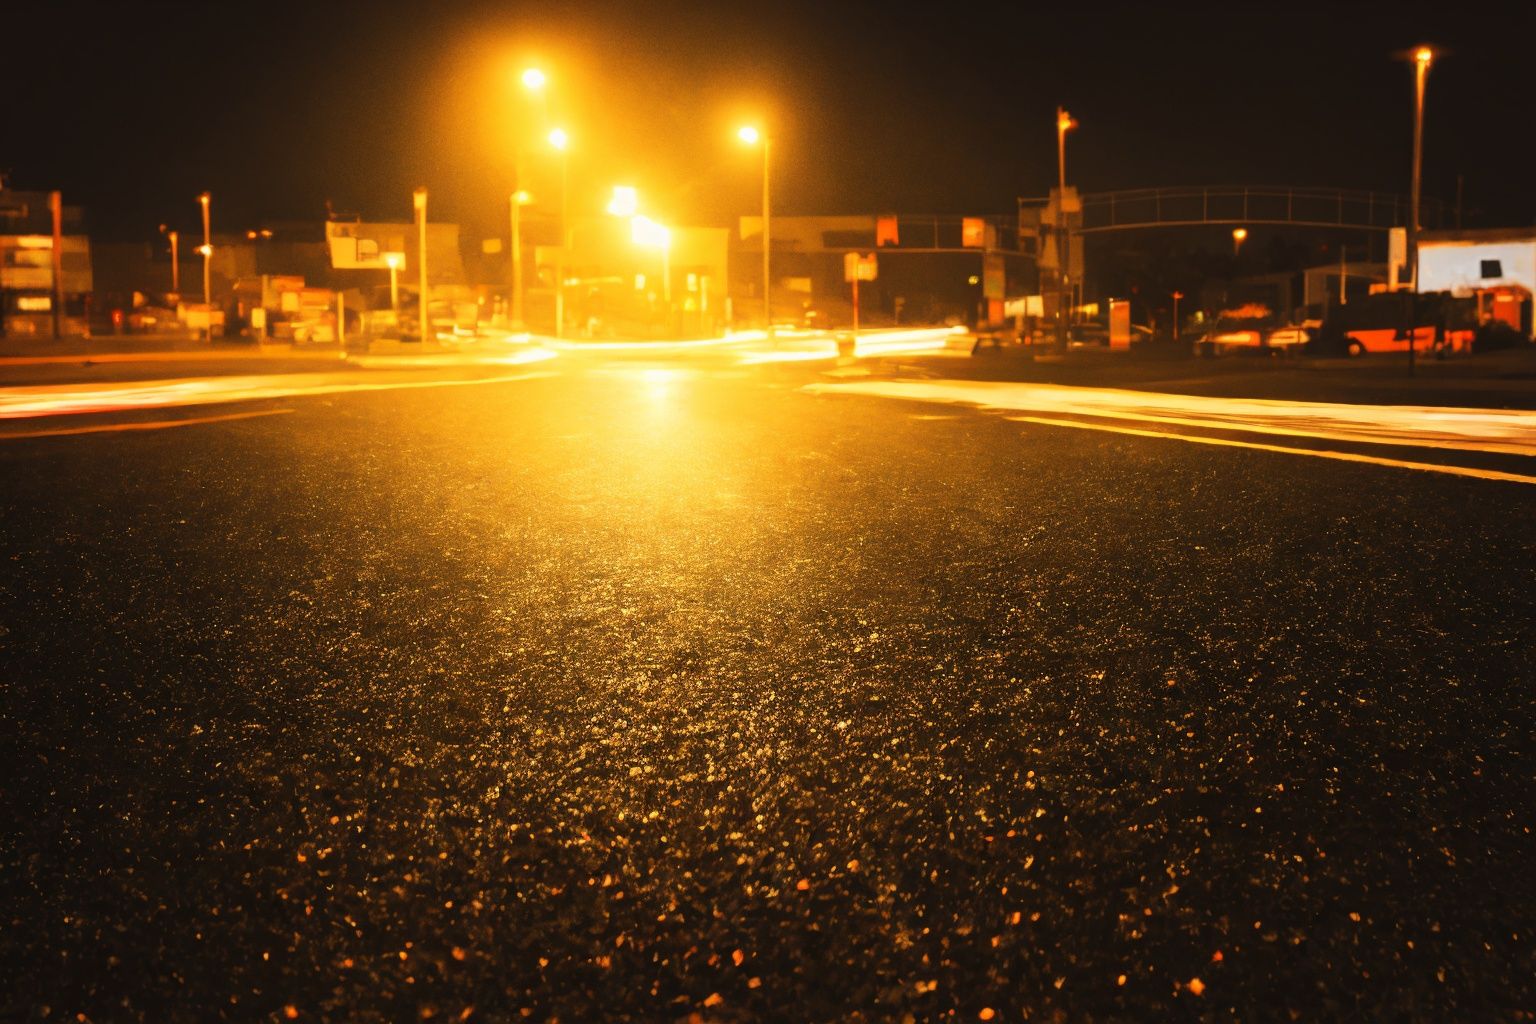 pedestrian walkway with light streaks on pavement in urban area at night, 128k, DSLR, Kodak, octane render, masterpiece, best photography, volumetric lighting, ultra sharp, complex_background 